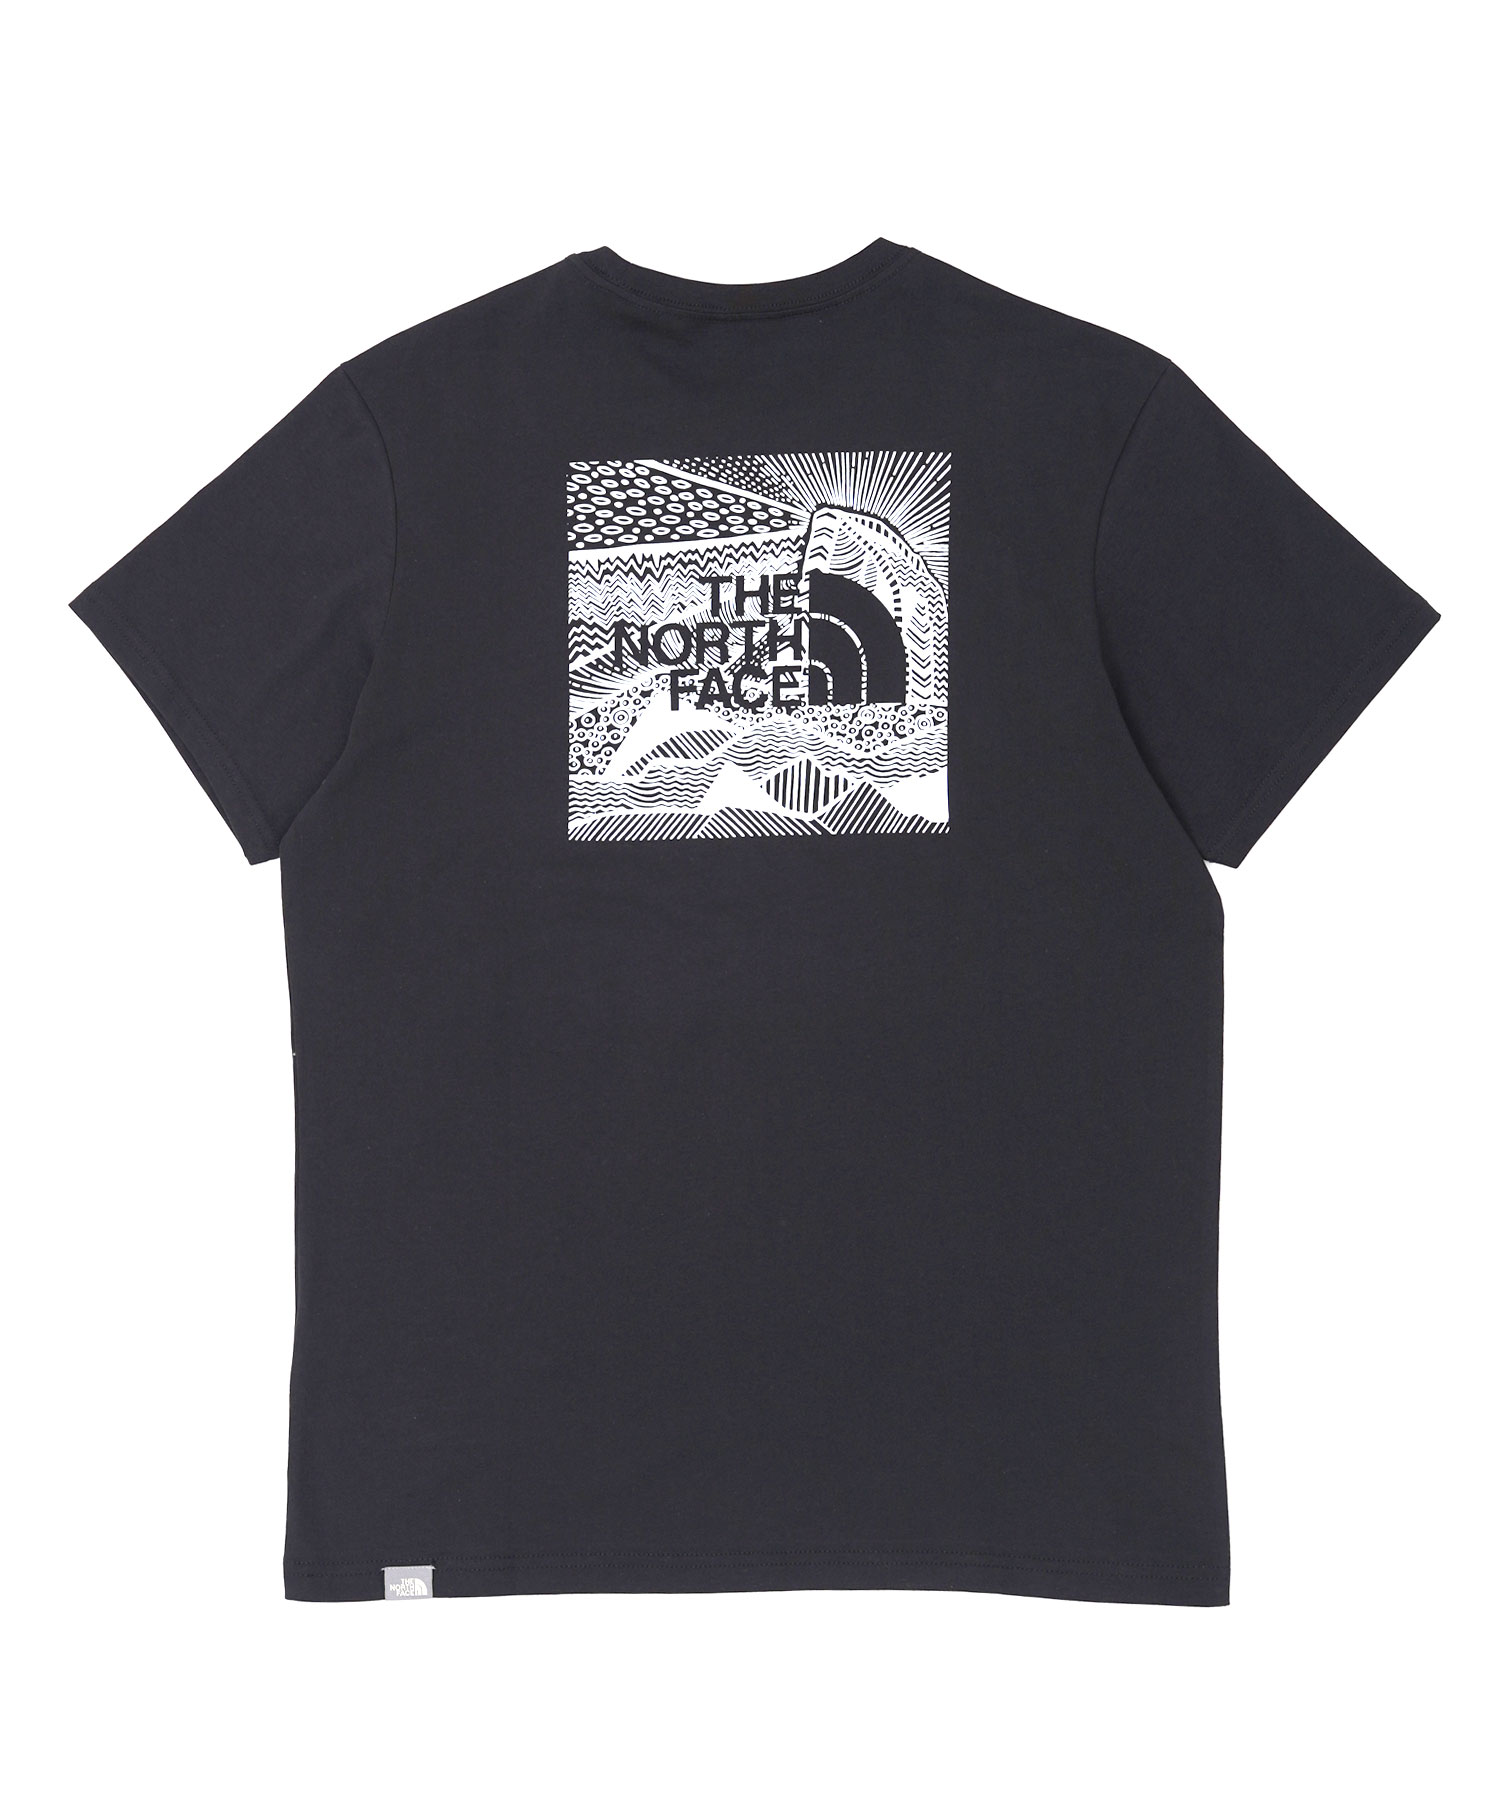 THE NORTH FACE(ザ・ノース・フェイス)REDBOX ボックスロゴ CELEBRATION 半袖Tシャツ